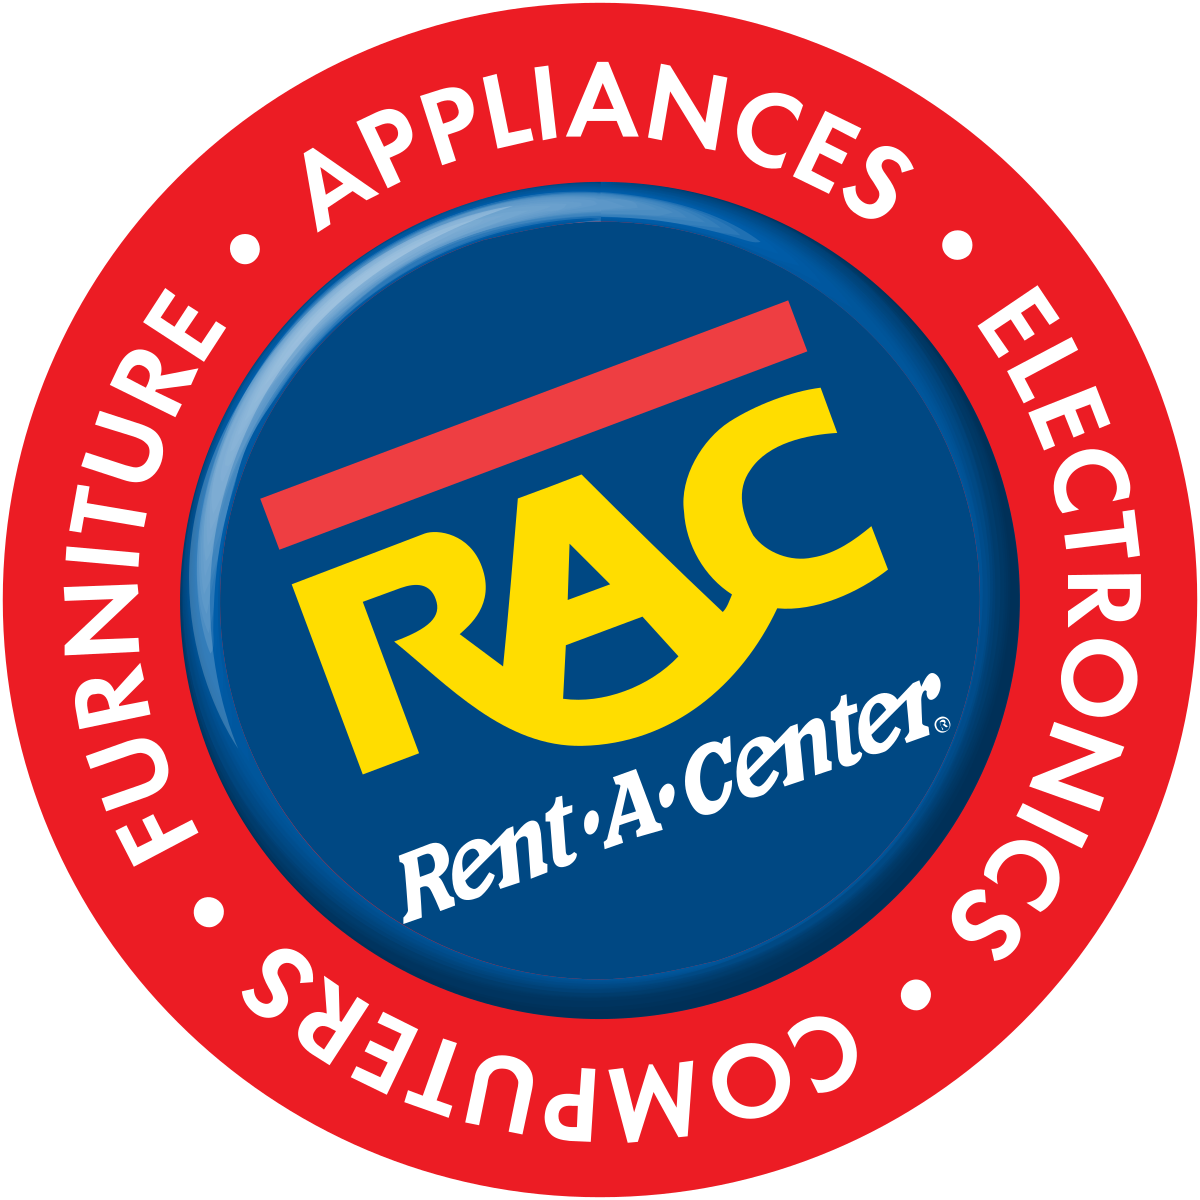 File:Rent-A-Center logo.svg - Wikipedia